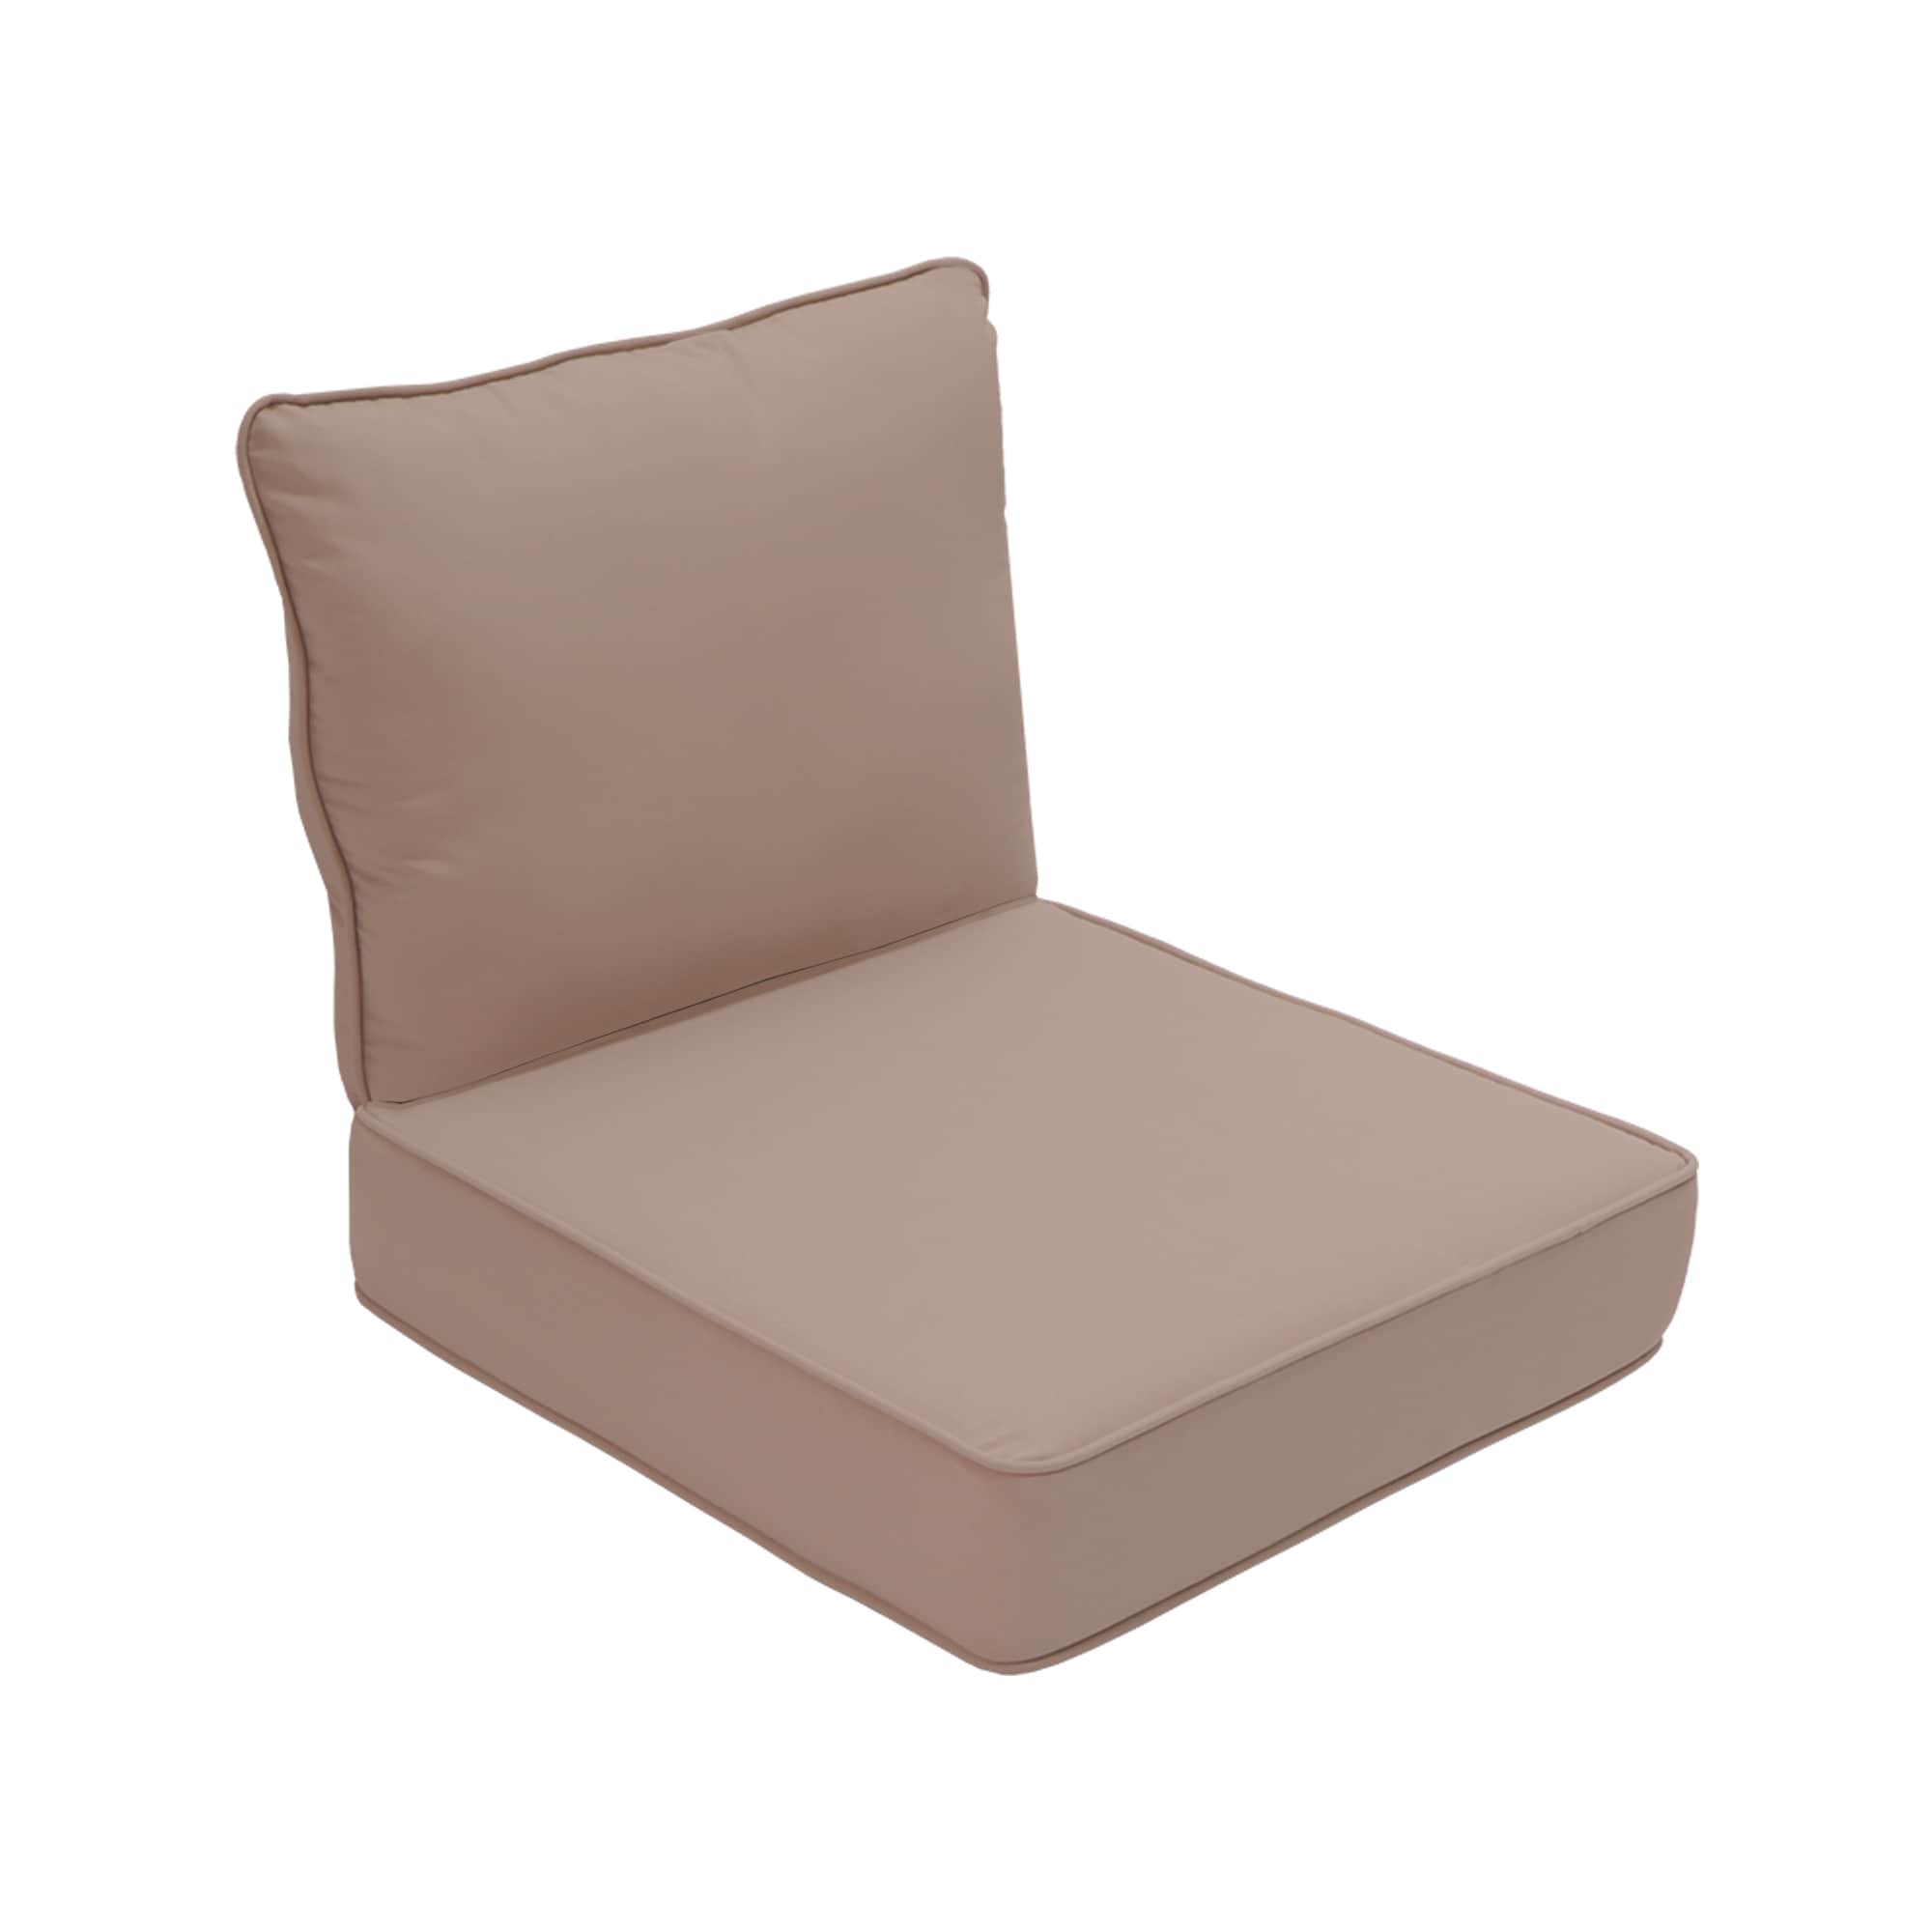 Outdoor Waterproof Patio Chair Seat Cushion, 25 x 25 x 4 Inch